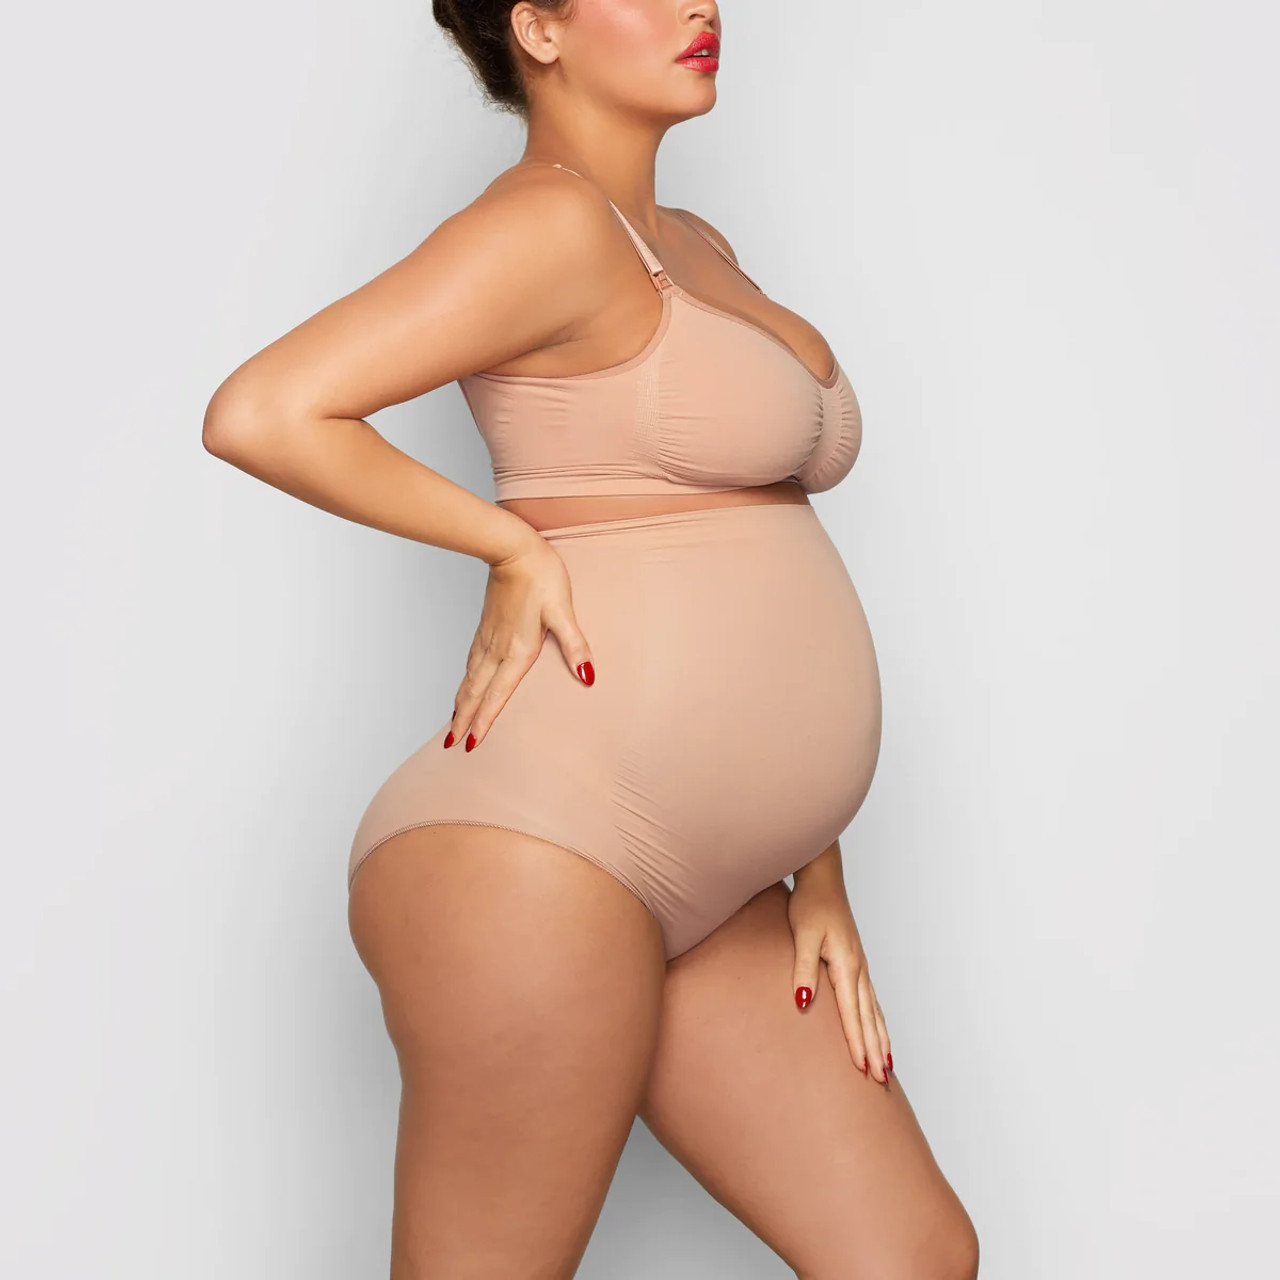 PEAUTY Baby Bump Maternity Shapewear Black Pregnancy Underwear Medium